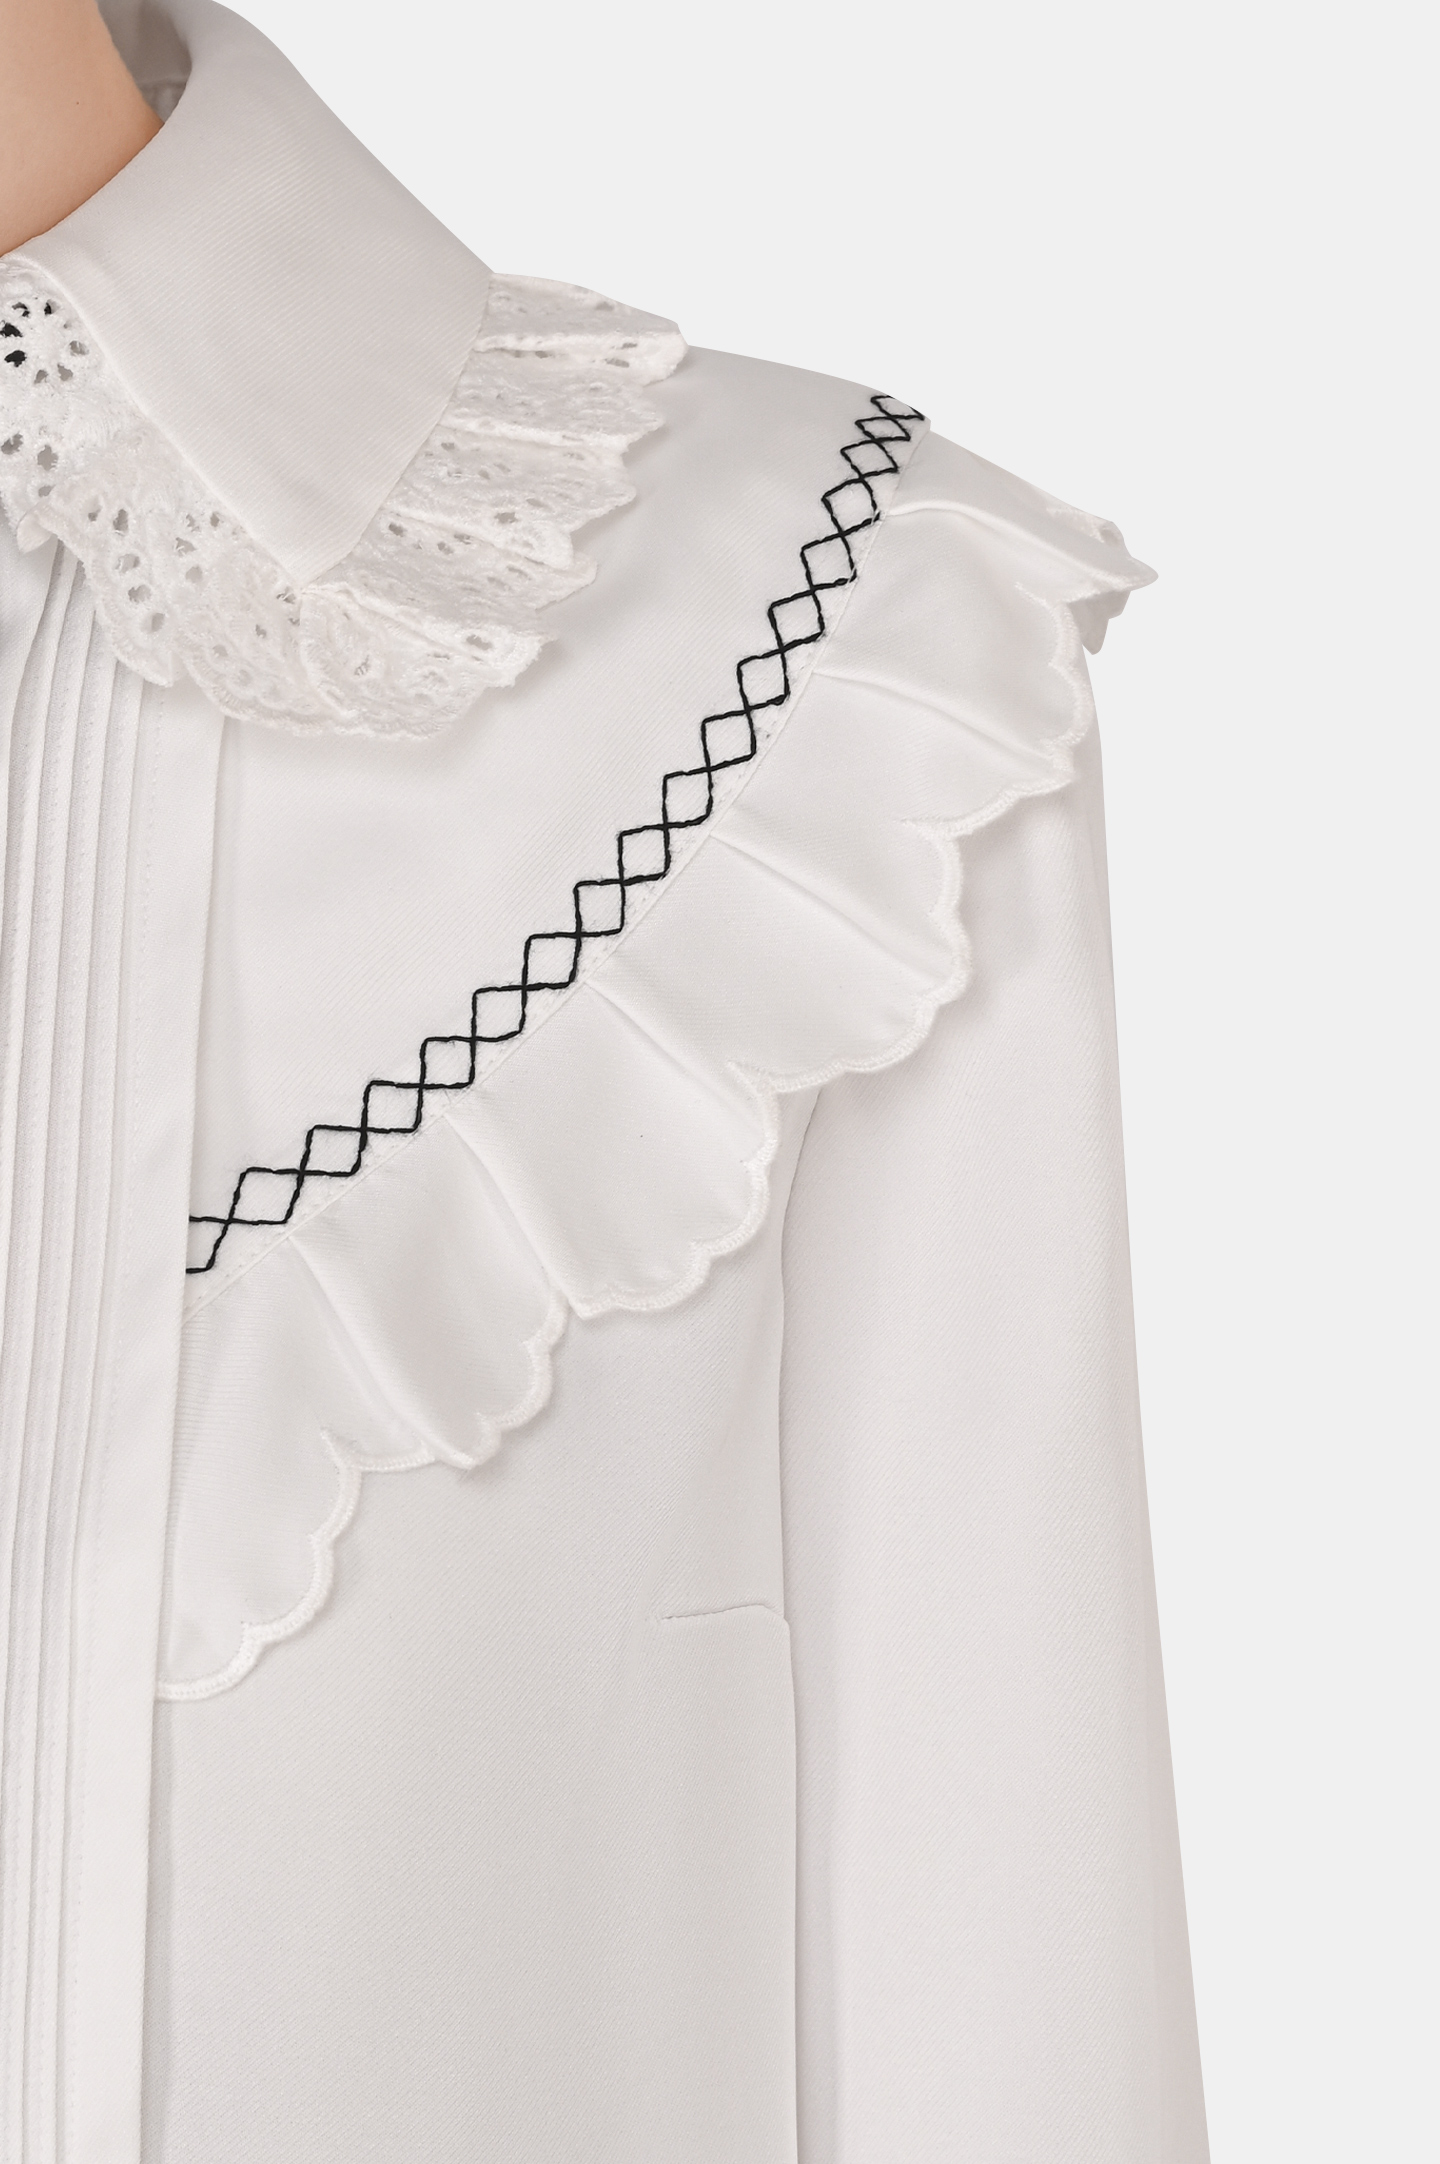 Блуза SELF PORTRAIT RS22-030T, цвет: Белый, Женский